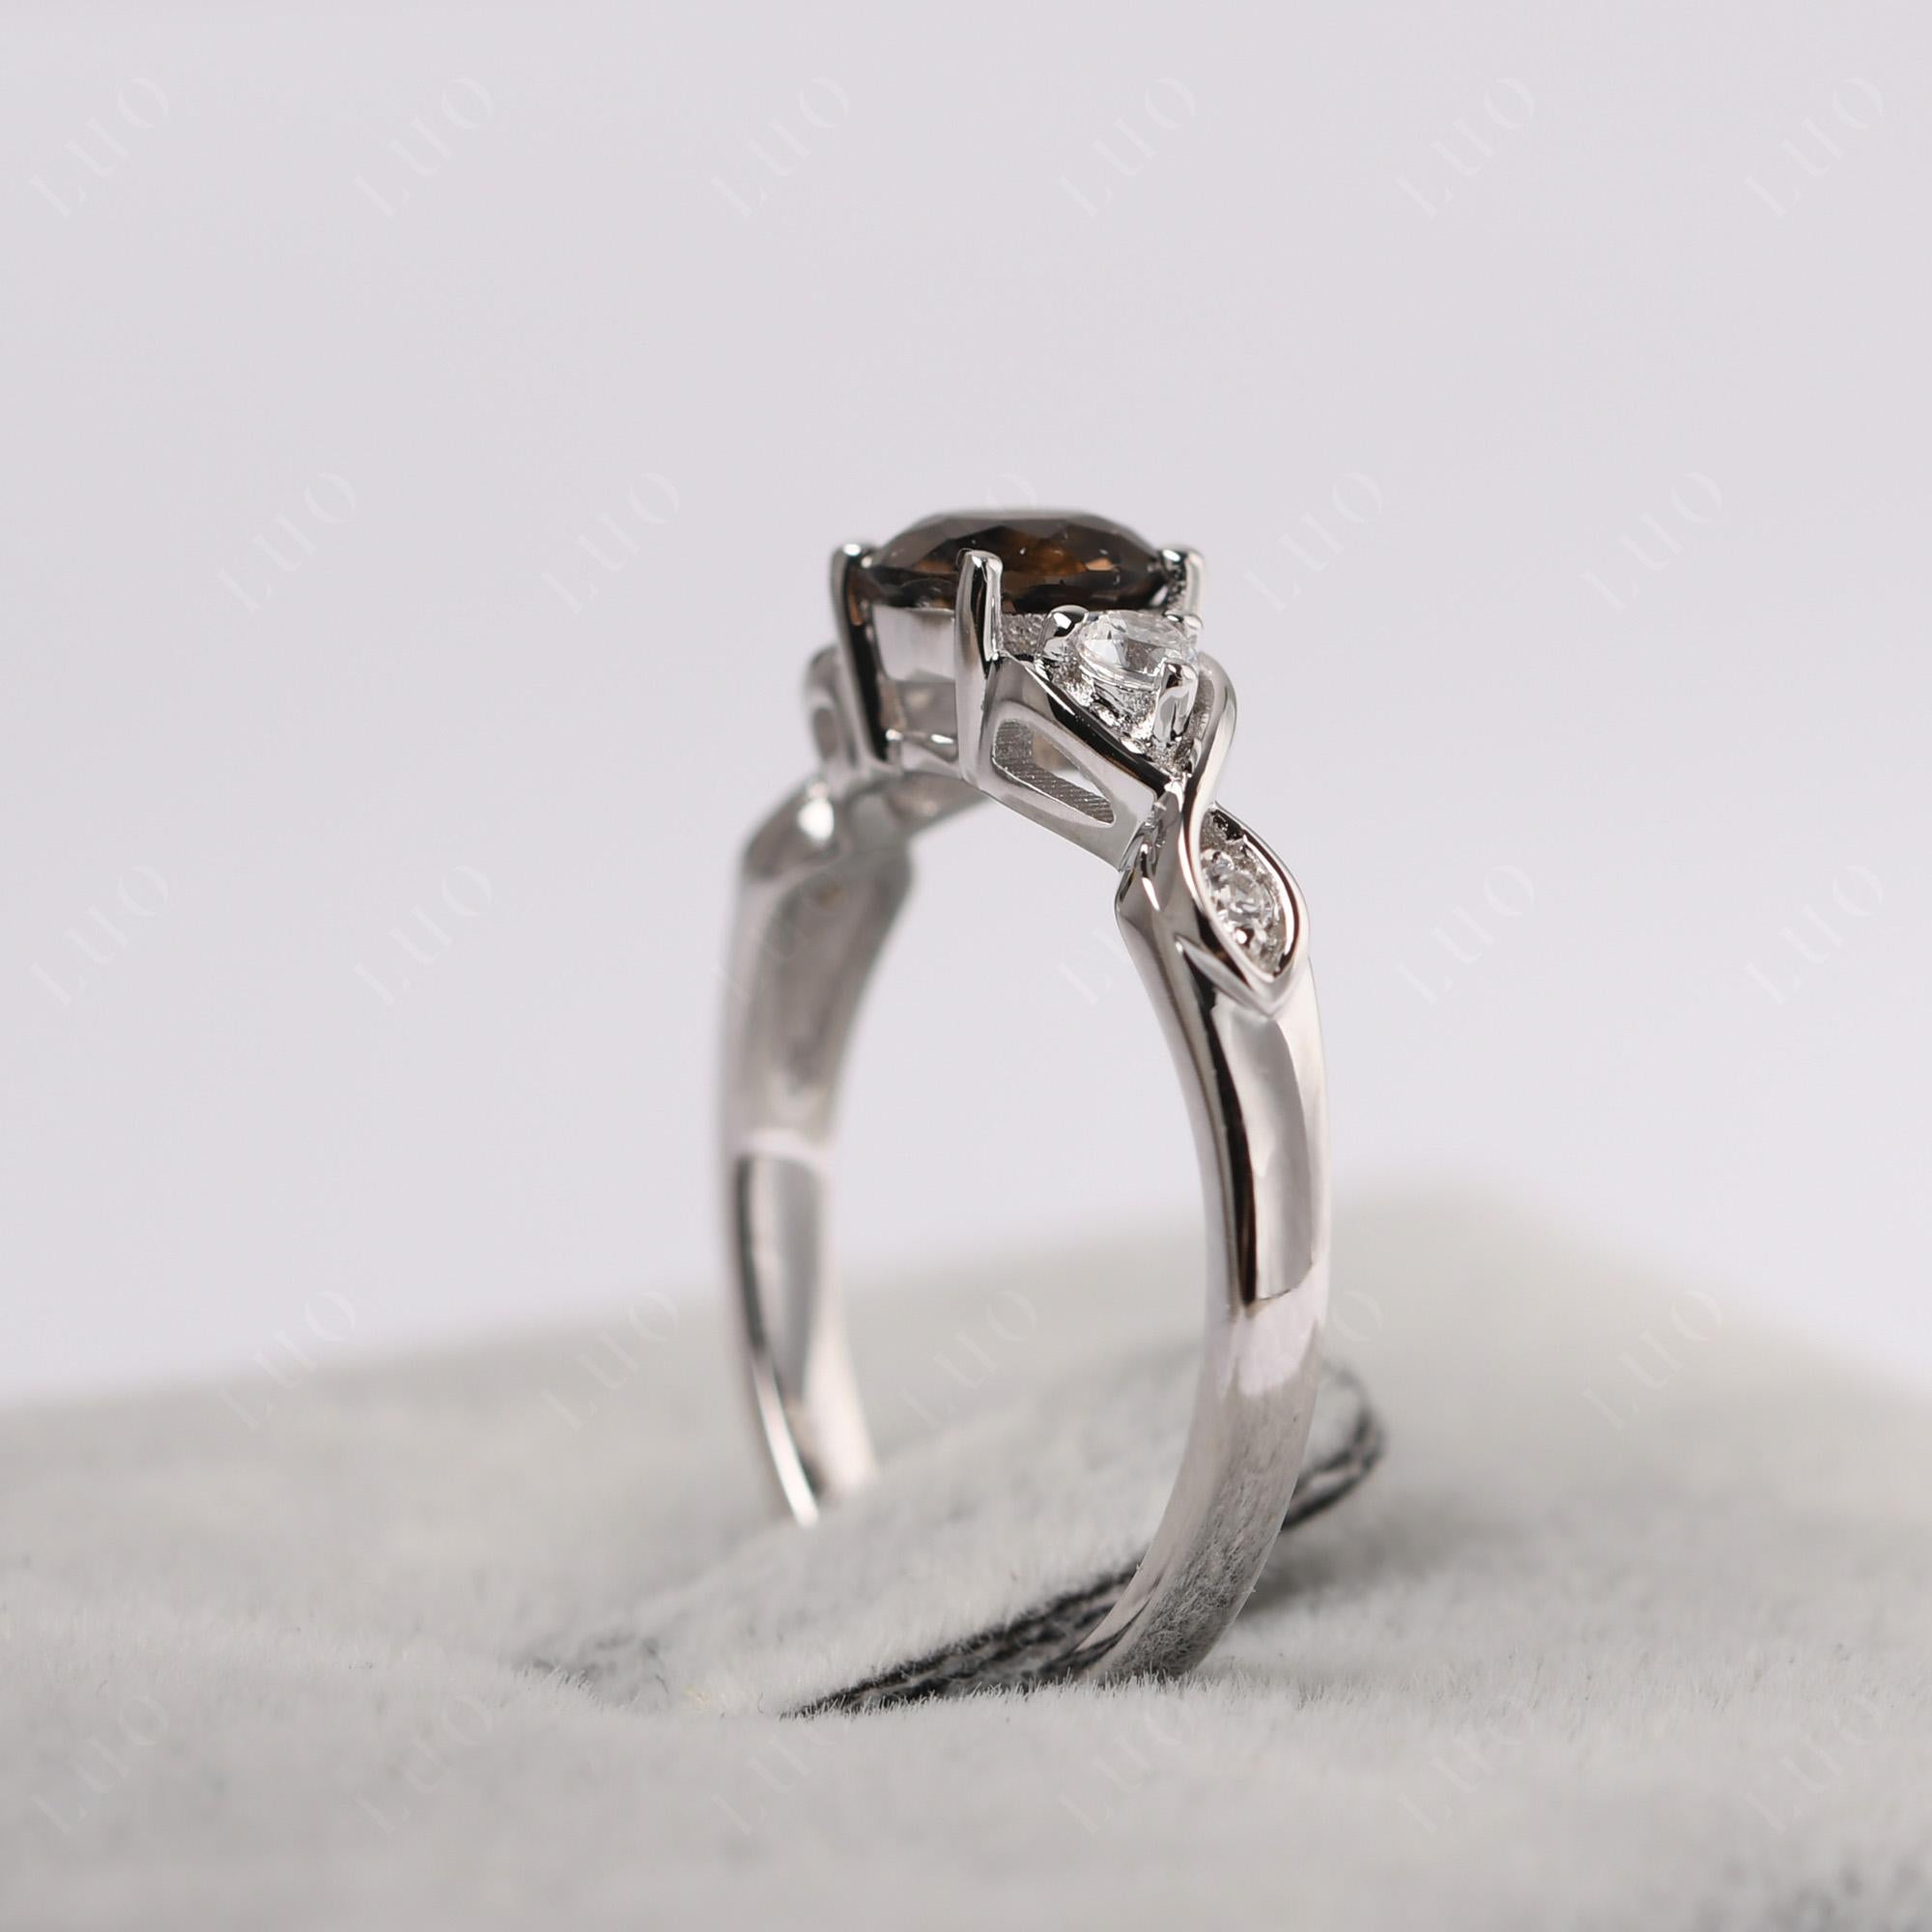 Round Smoky Quartz Ring Wedding Ring - LUO Jewelry